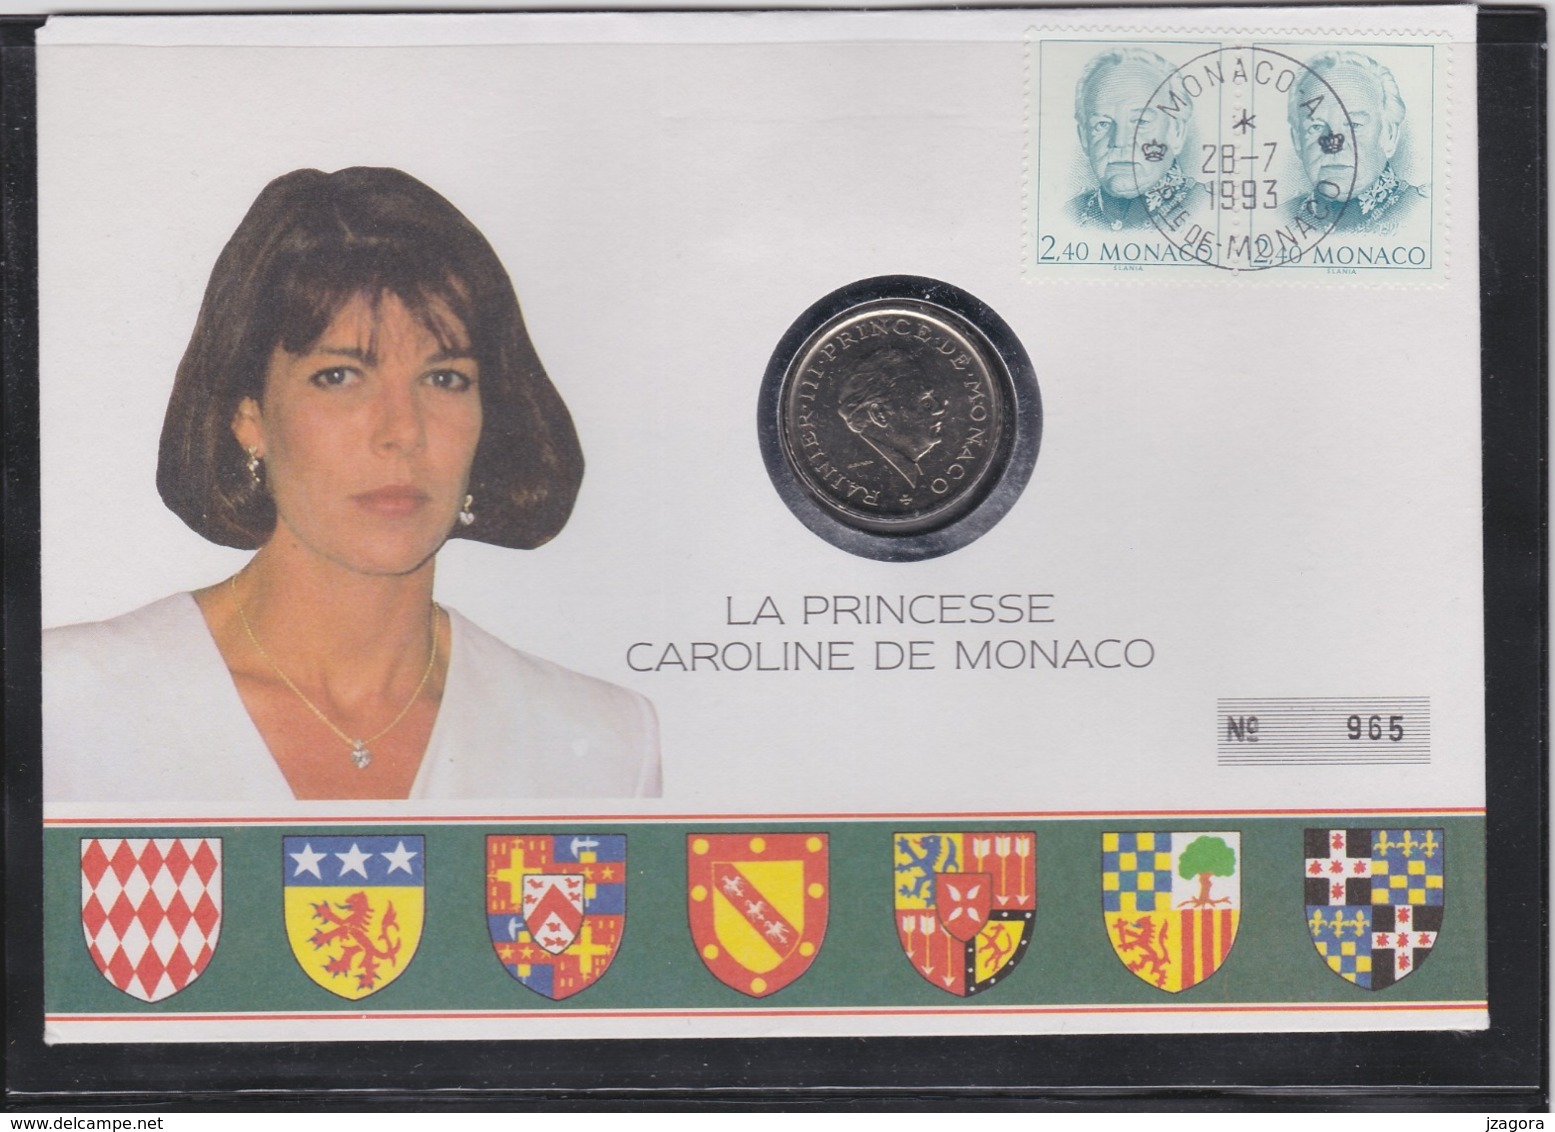 PRINCESSE GRACE COMMEMORATIVE COIN LETTER - MONACO 1993 Slania Engraved Stamp - Koniklijke Families